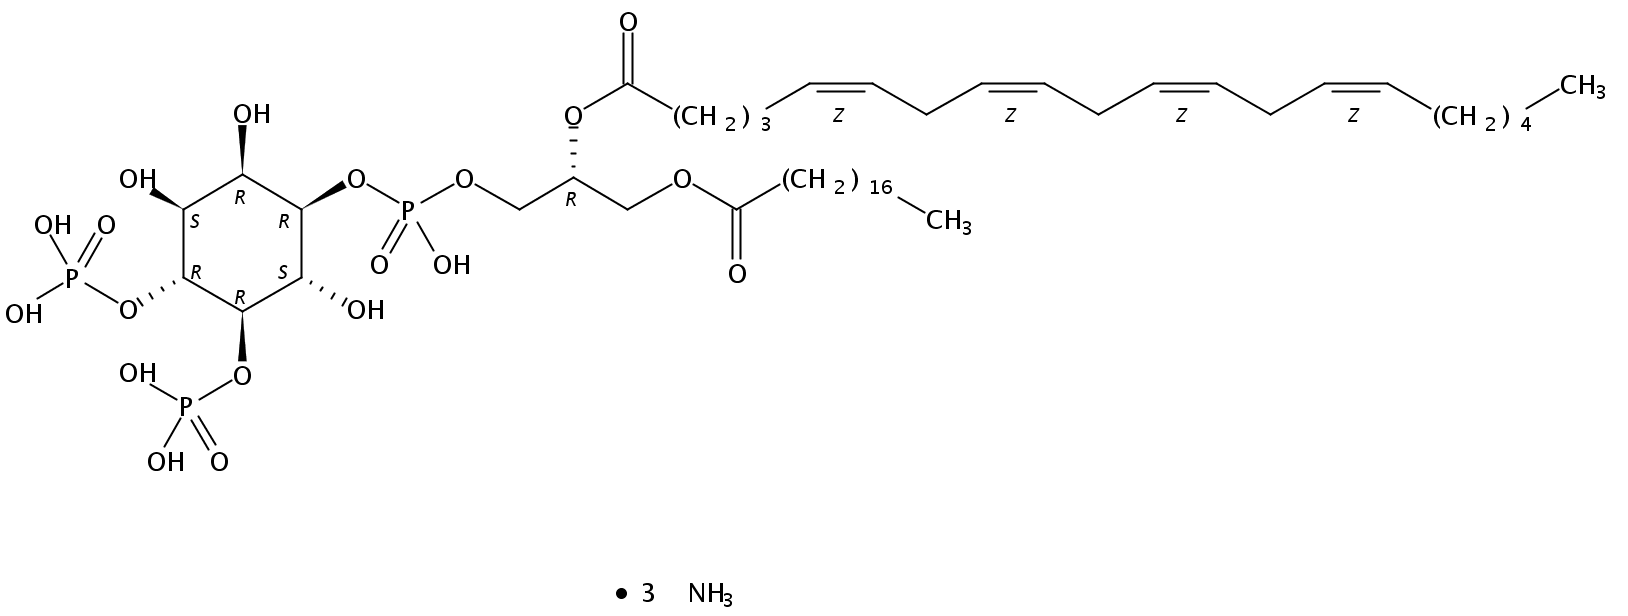 1-stearoyl-2-arachidonoyl-sn-glycero-3-phospho-(1'-myo-inositol-4',5'-bisphosphate) (ammonium salt)